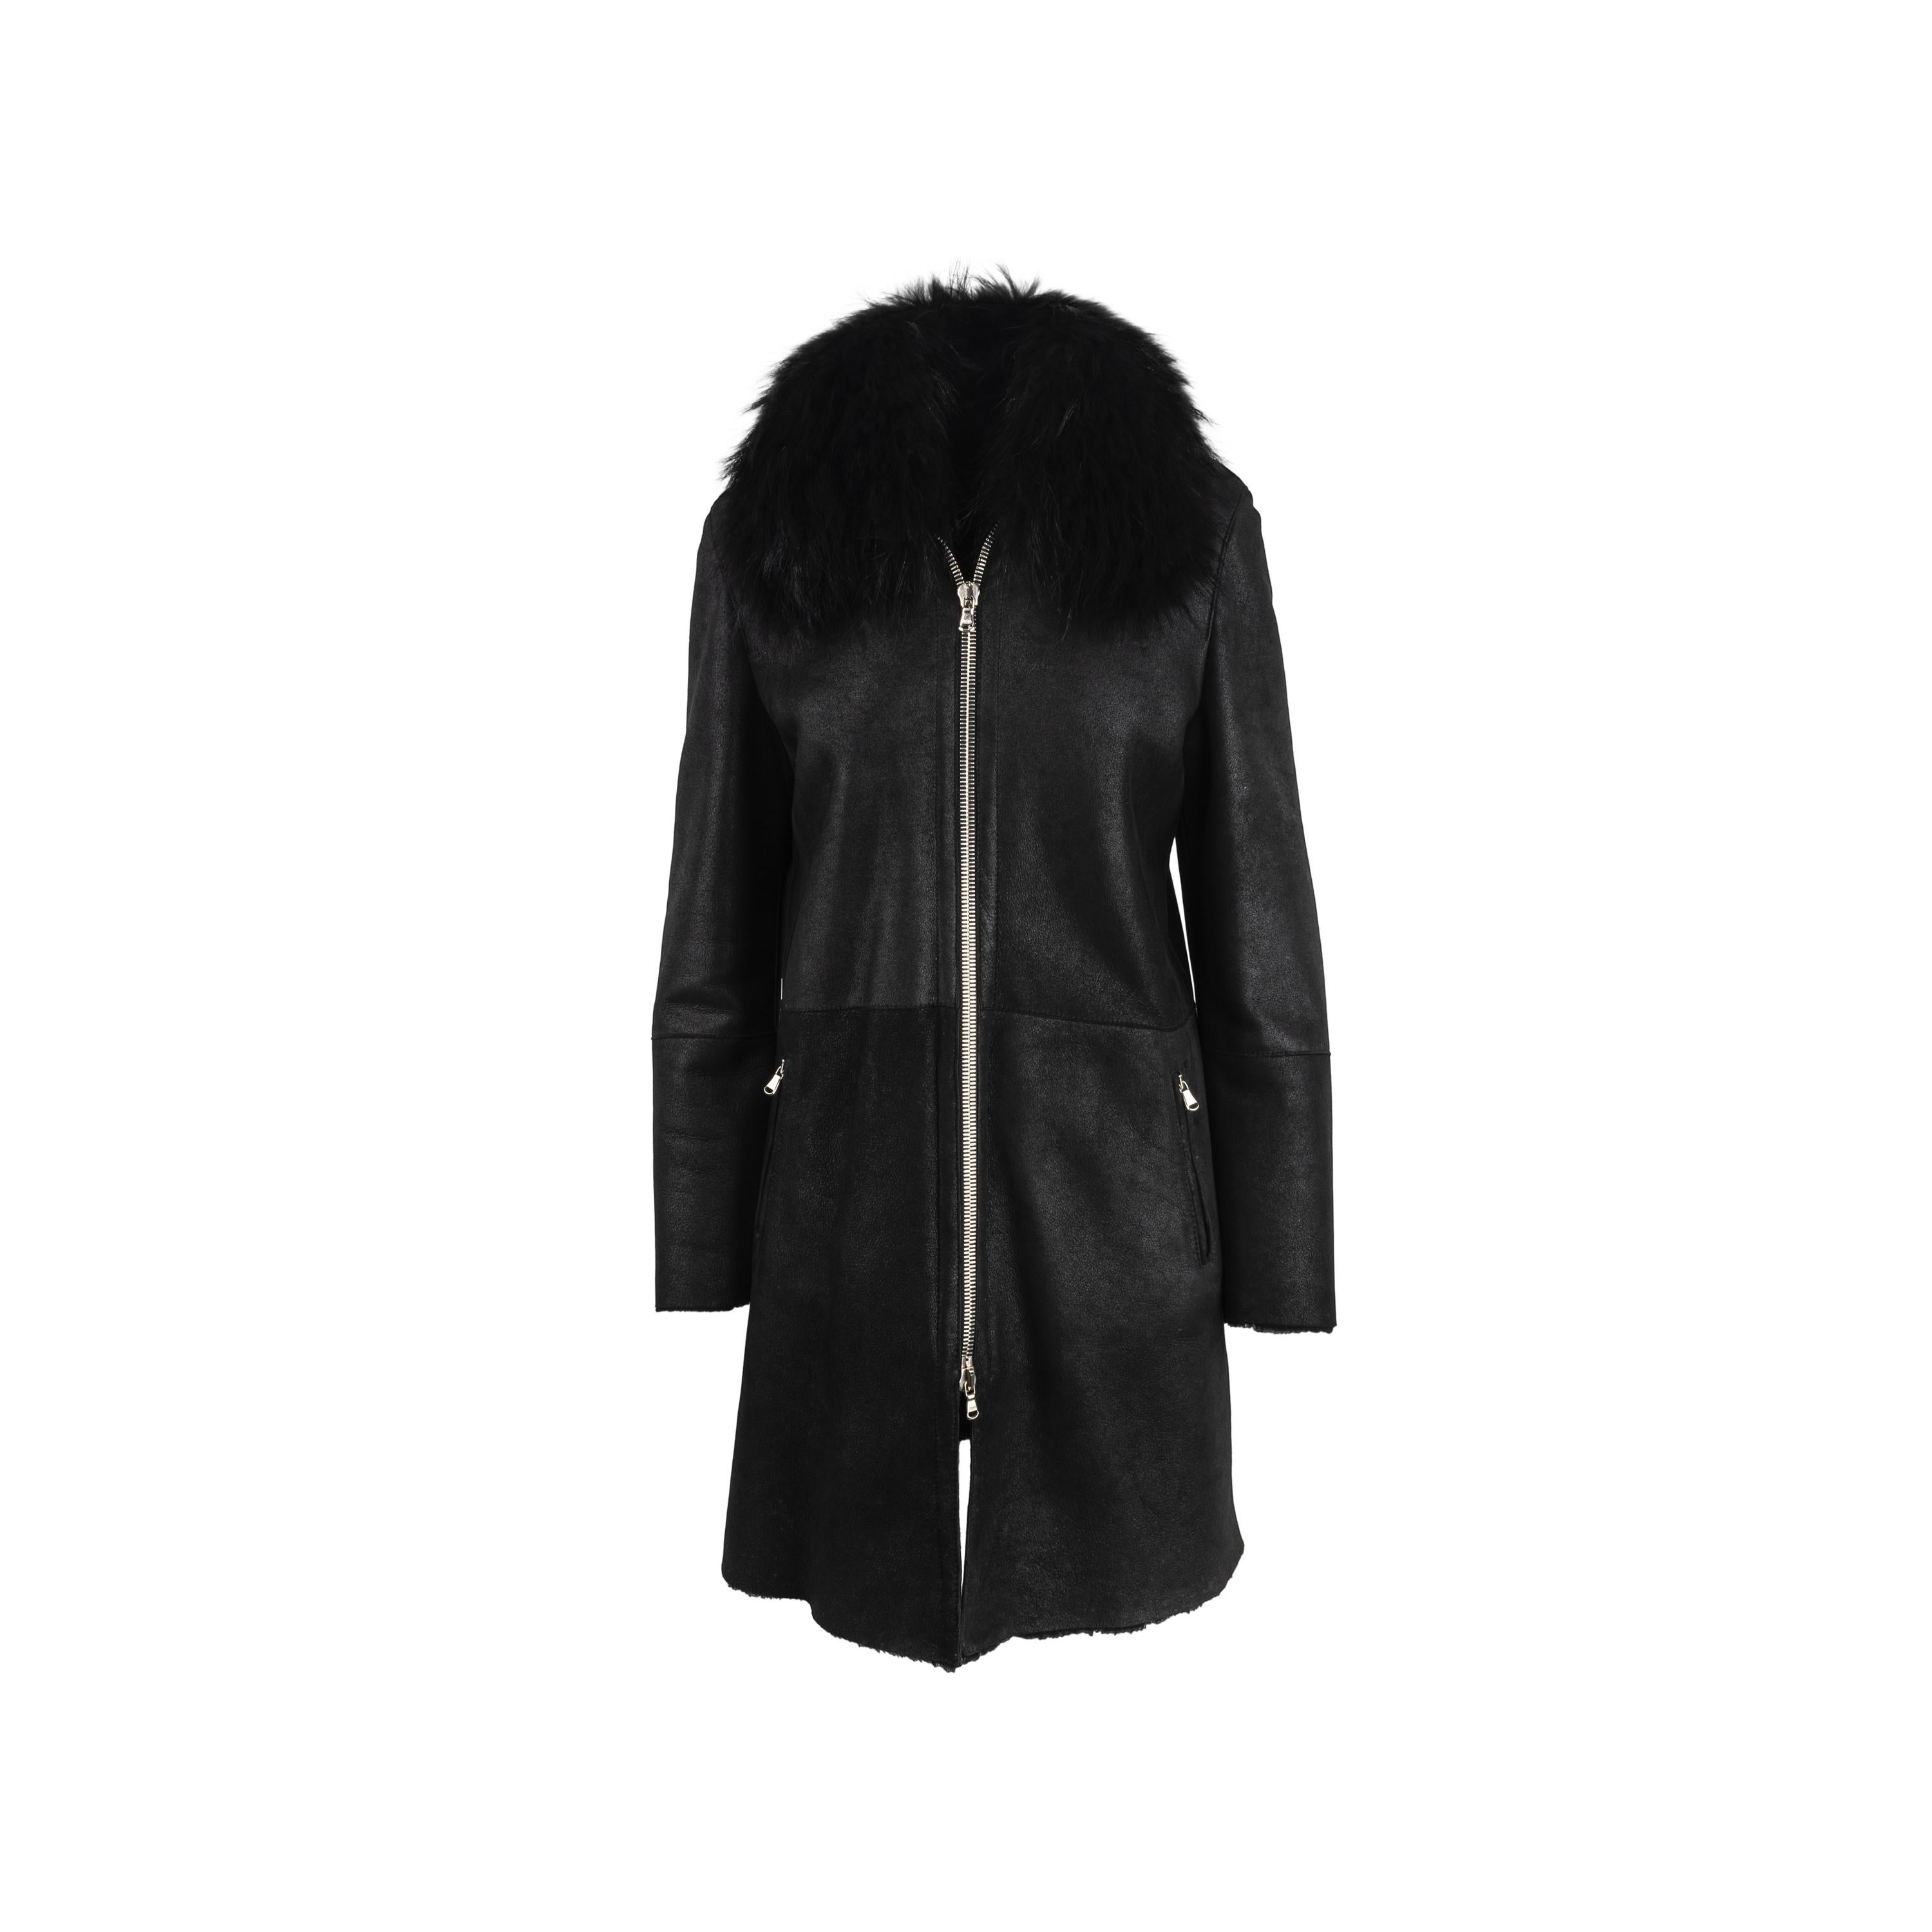 Girgio Brato black shearling coat. Long style, central zip fastening, fox fur collar.